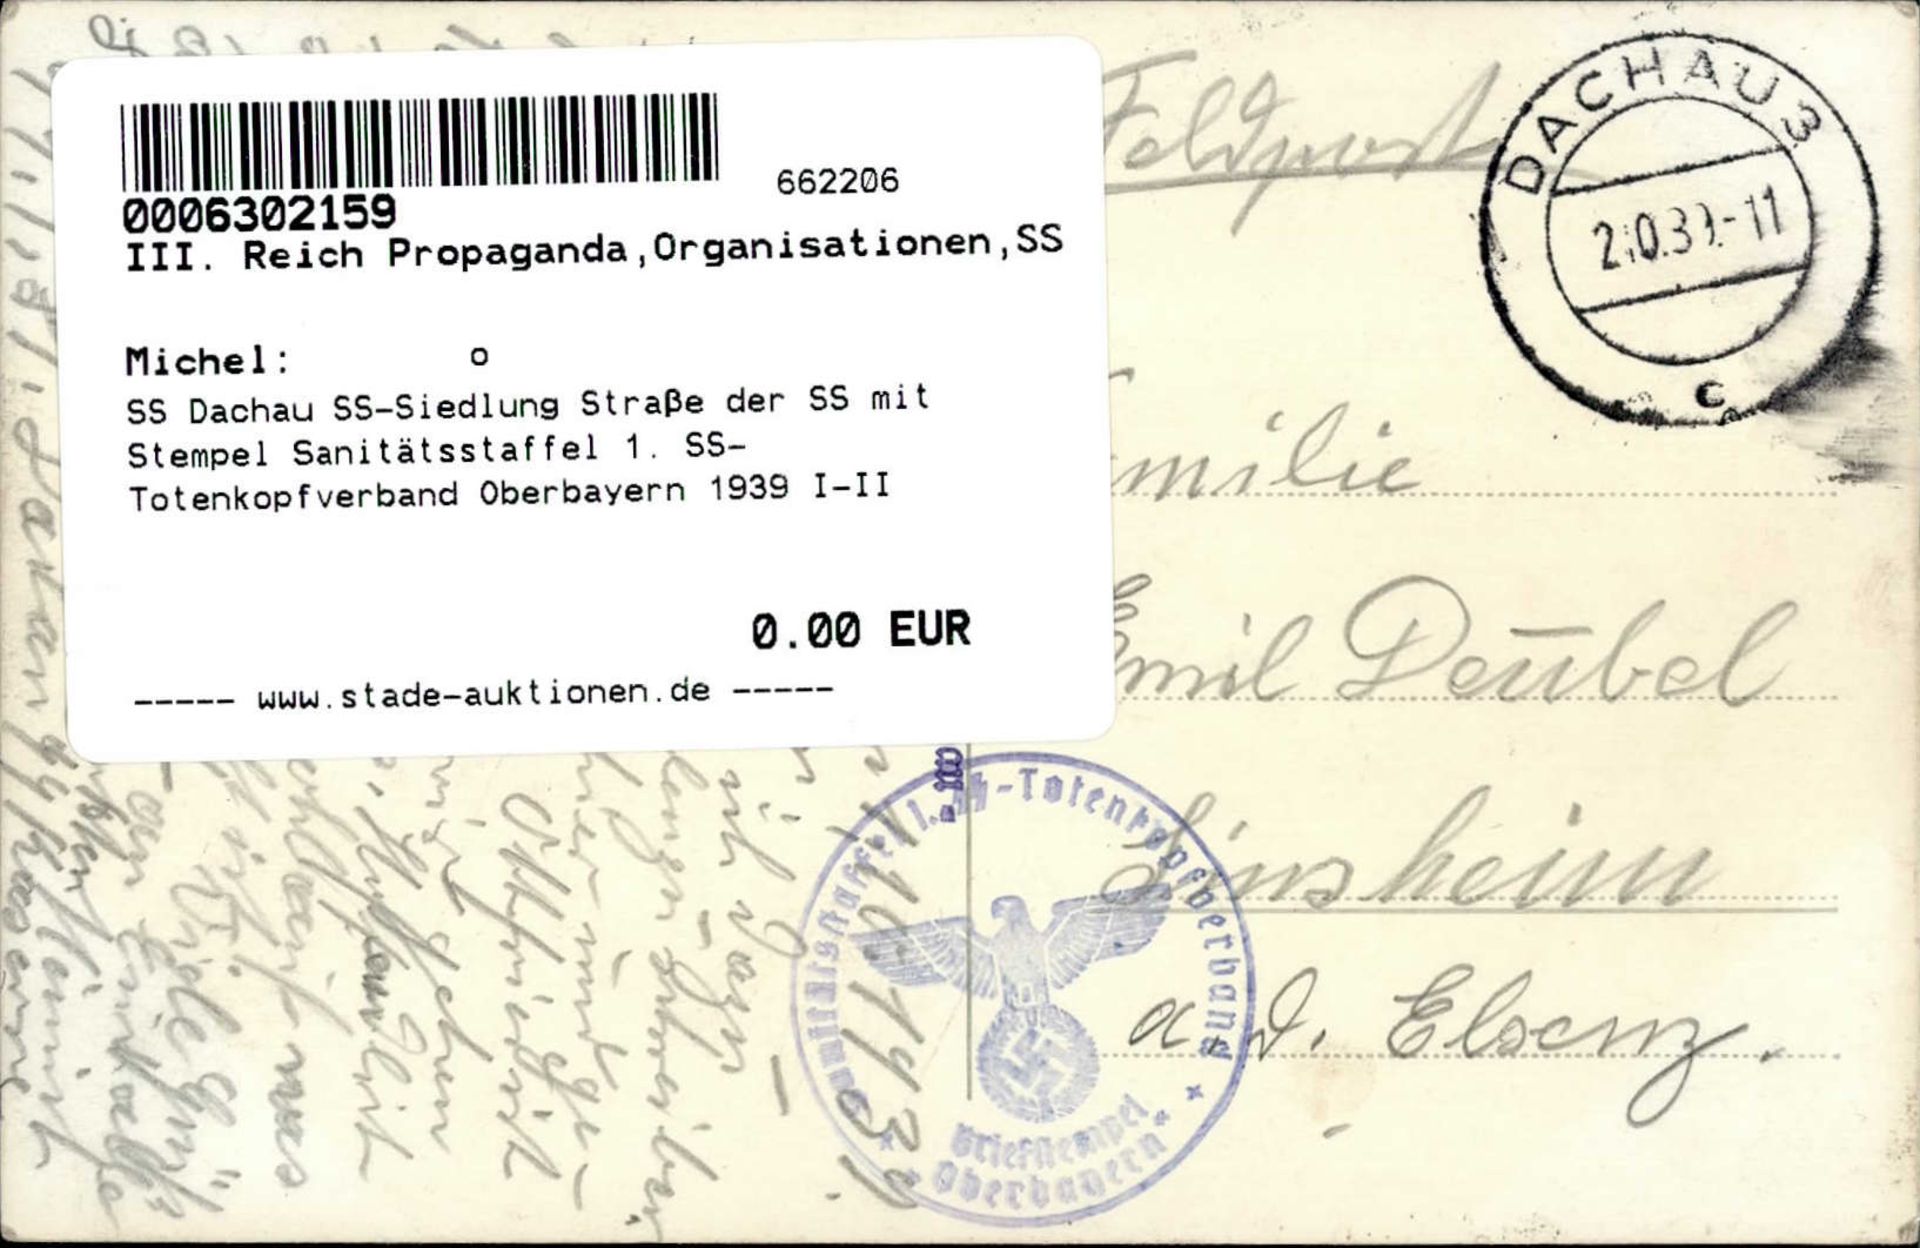 SS Dachau SS-Siedlung Straße der SS mit Stempel Sanitätsstaffel 1. SS-Totenkopfverband Oberbayern - Image 2 of 2